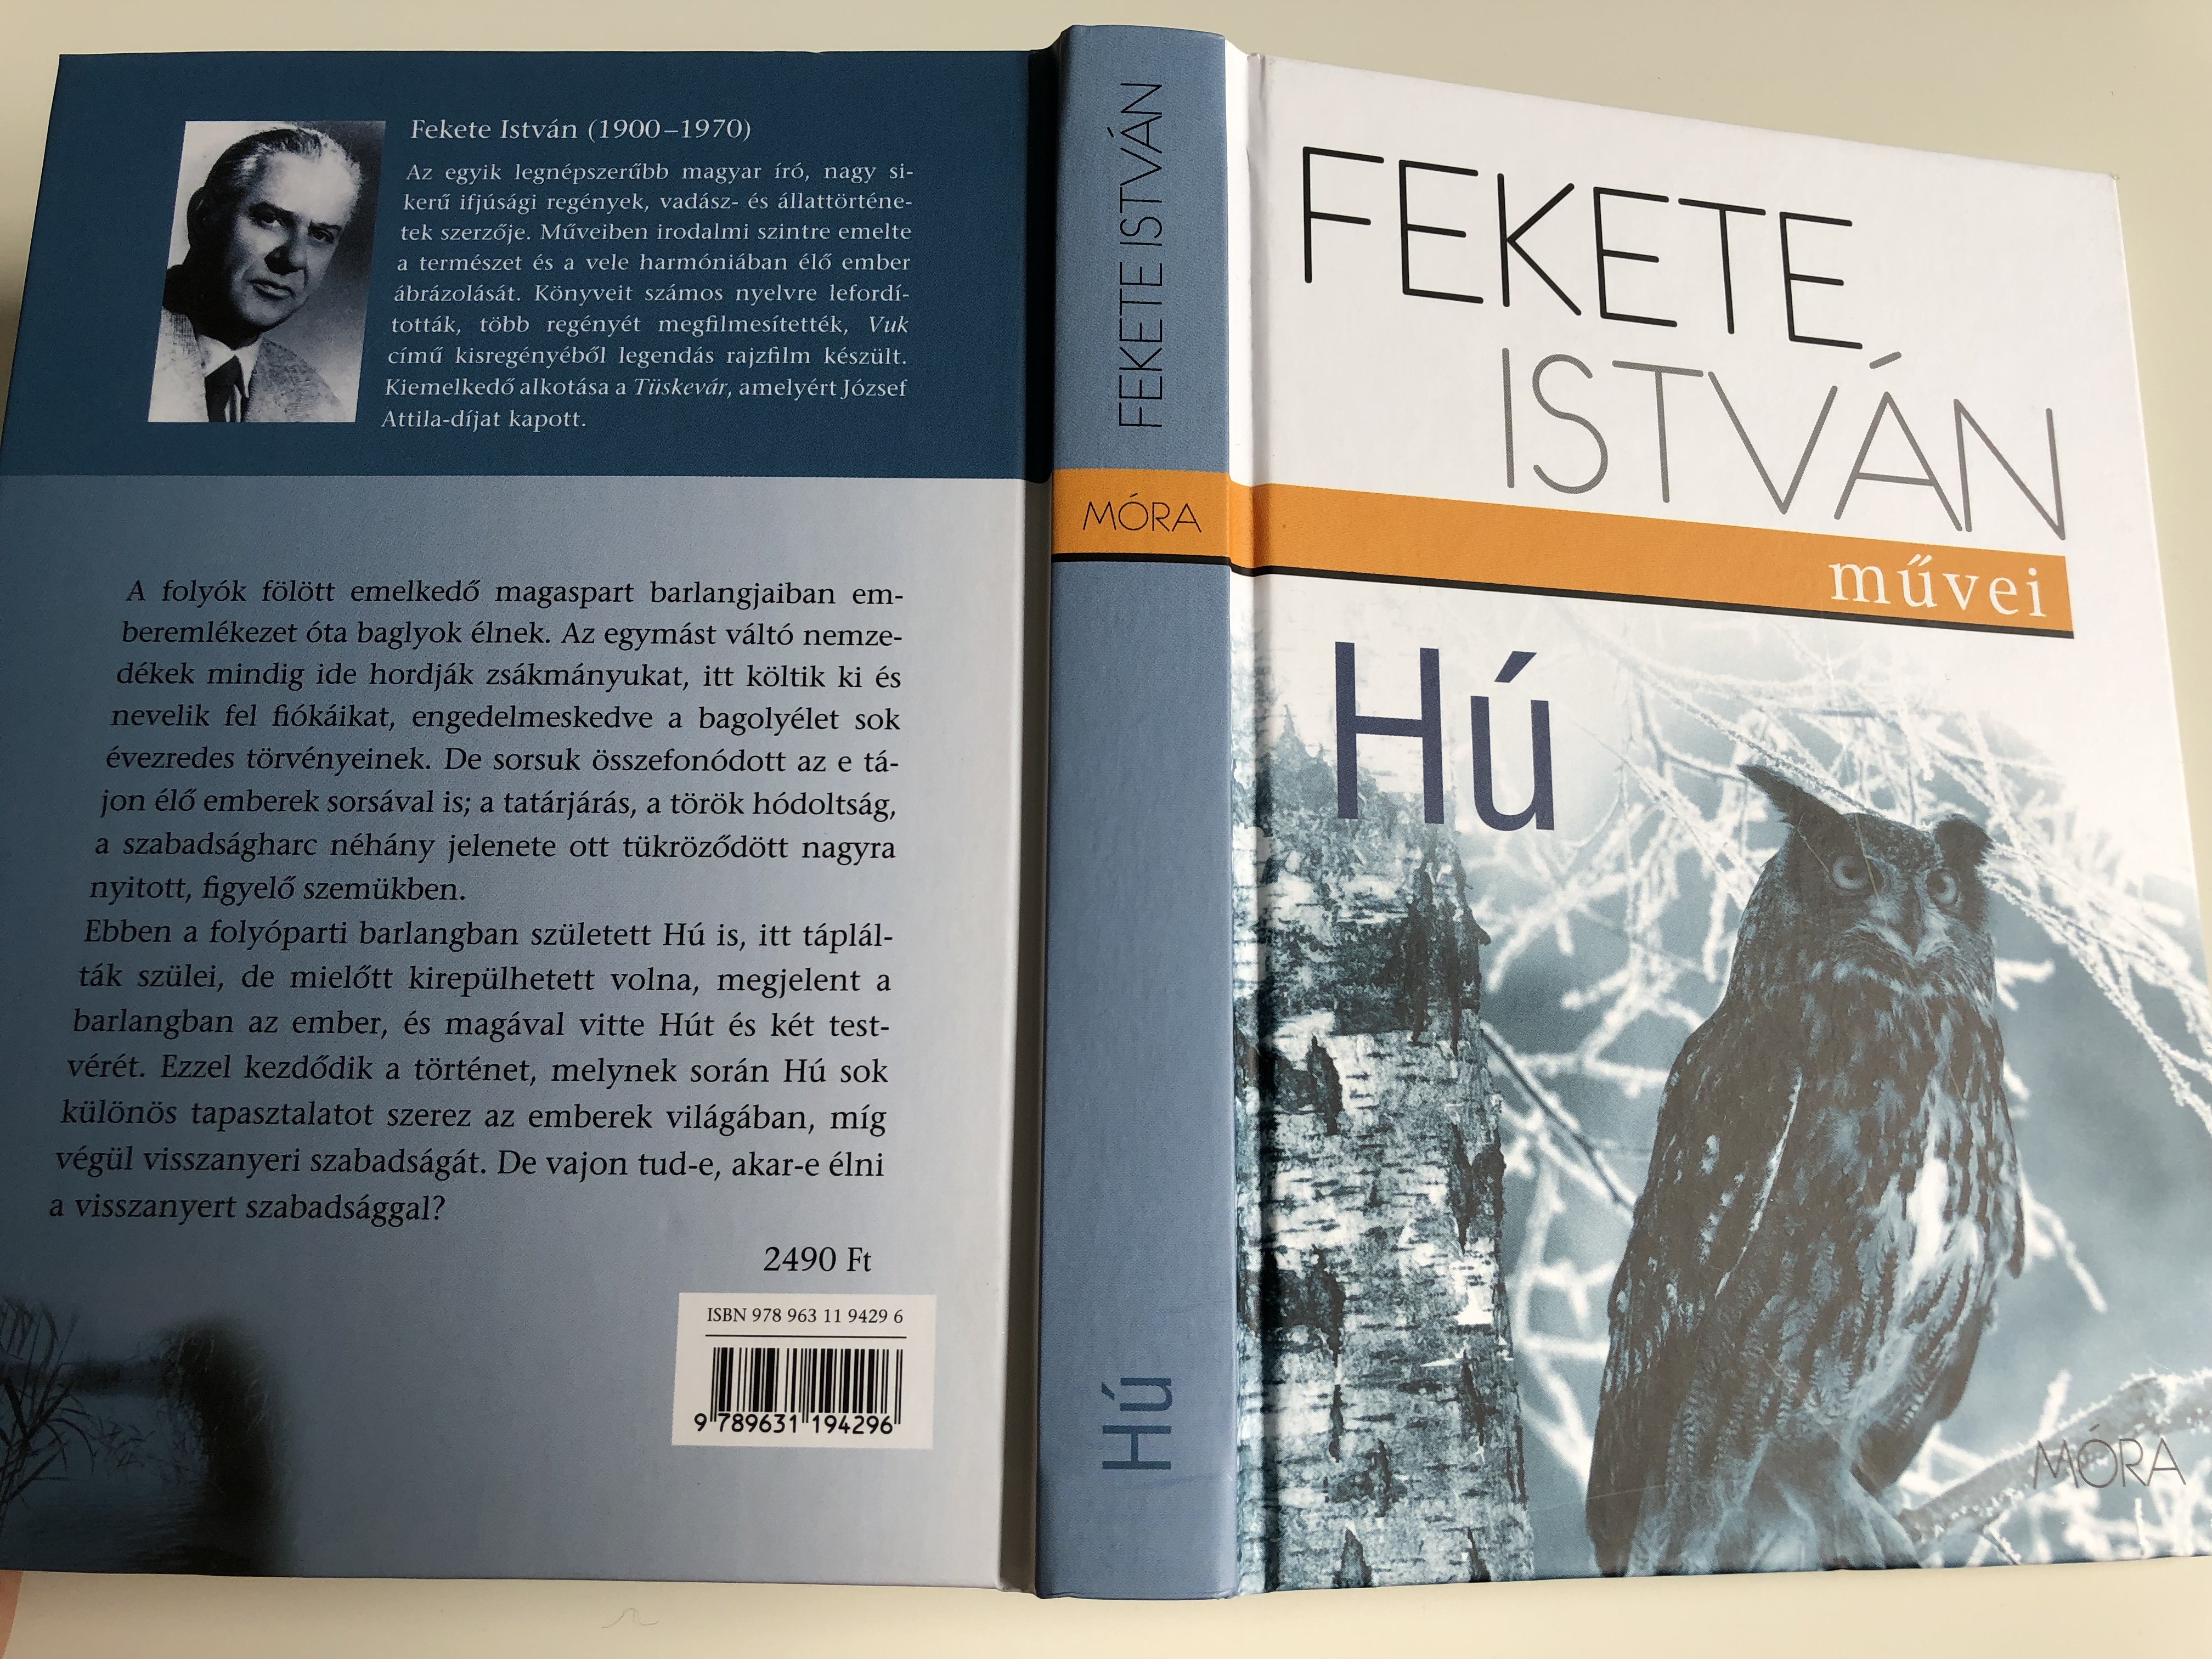 h-by-fekete-istv-n-illustrations-by-bakai-piroska-m-ra-kiad-2013-an-owl-s-novel-by-famous-hungarian-writer-istv-n-fekete-11-.jpg